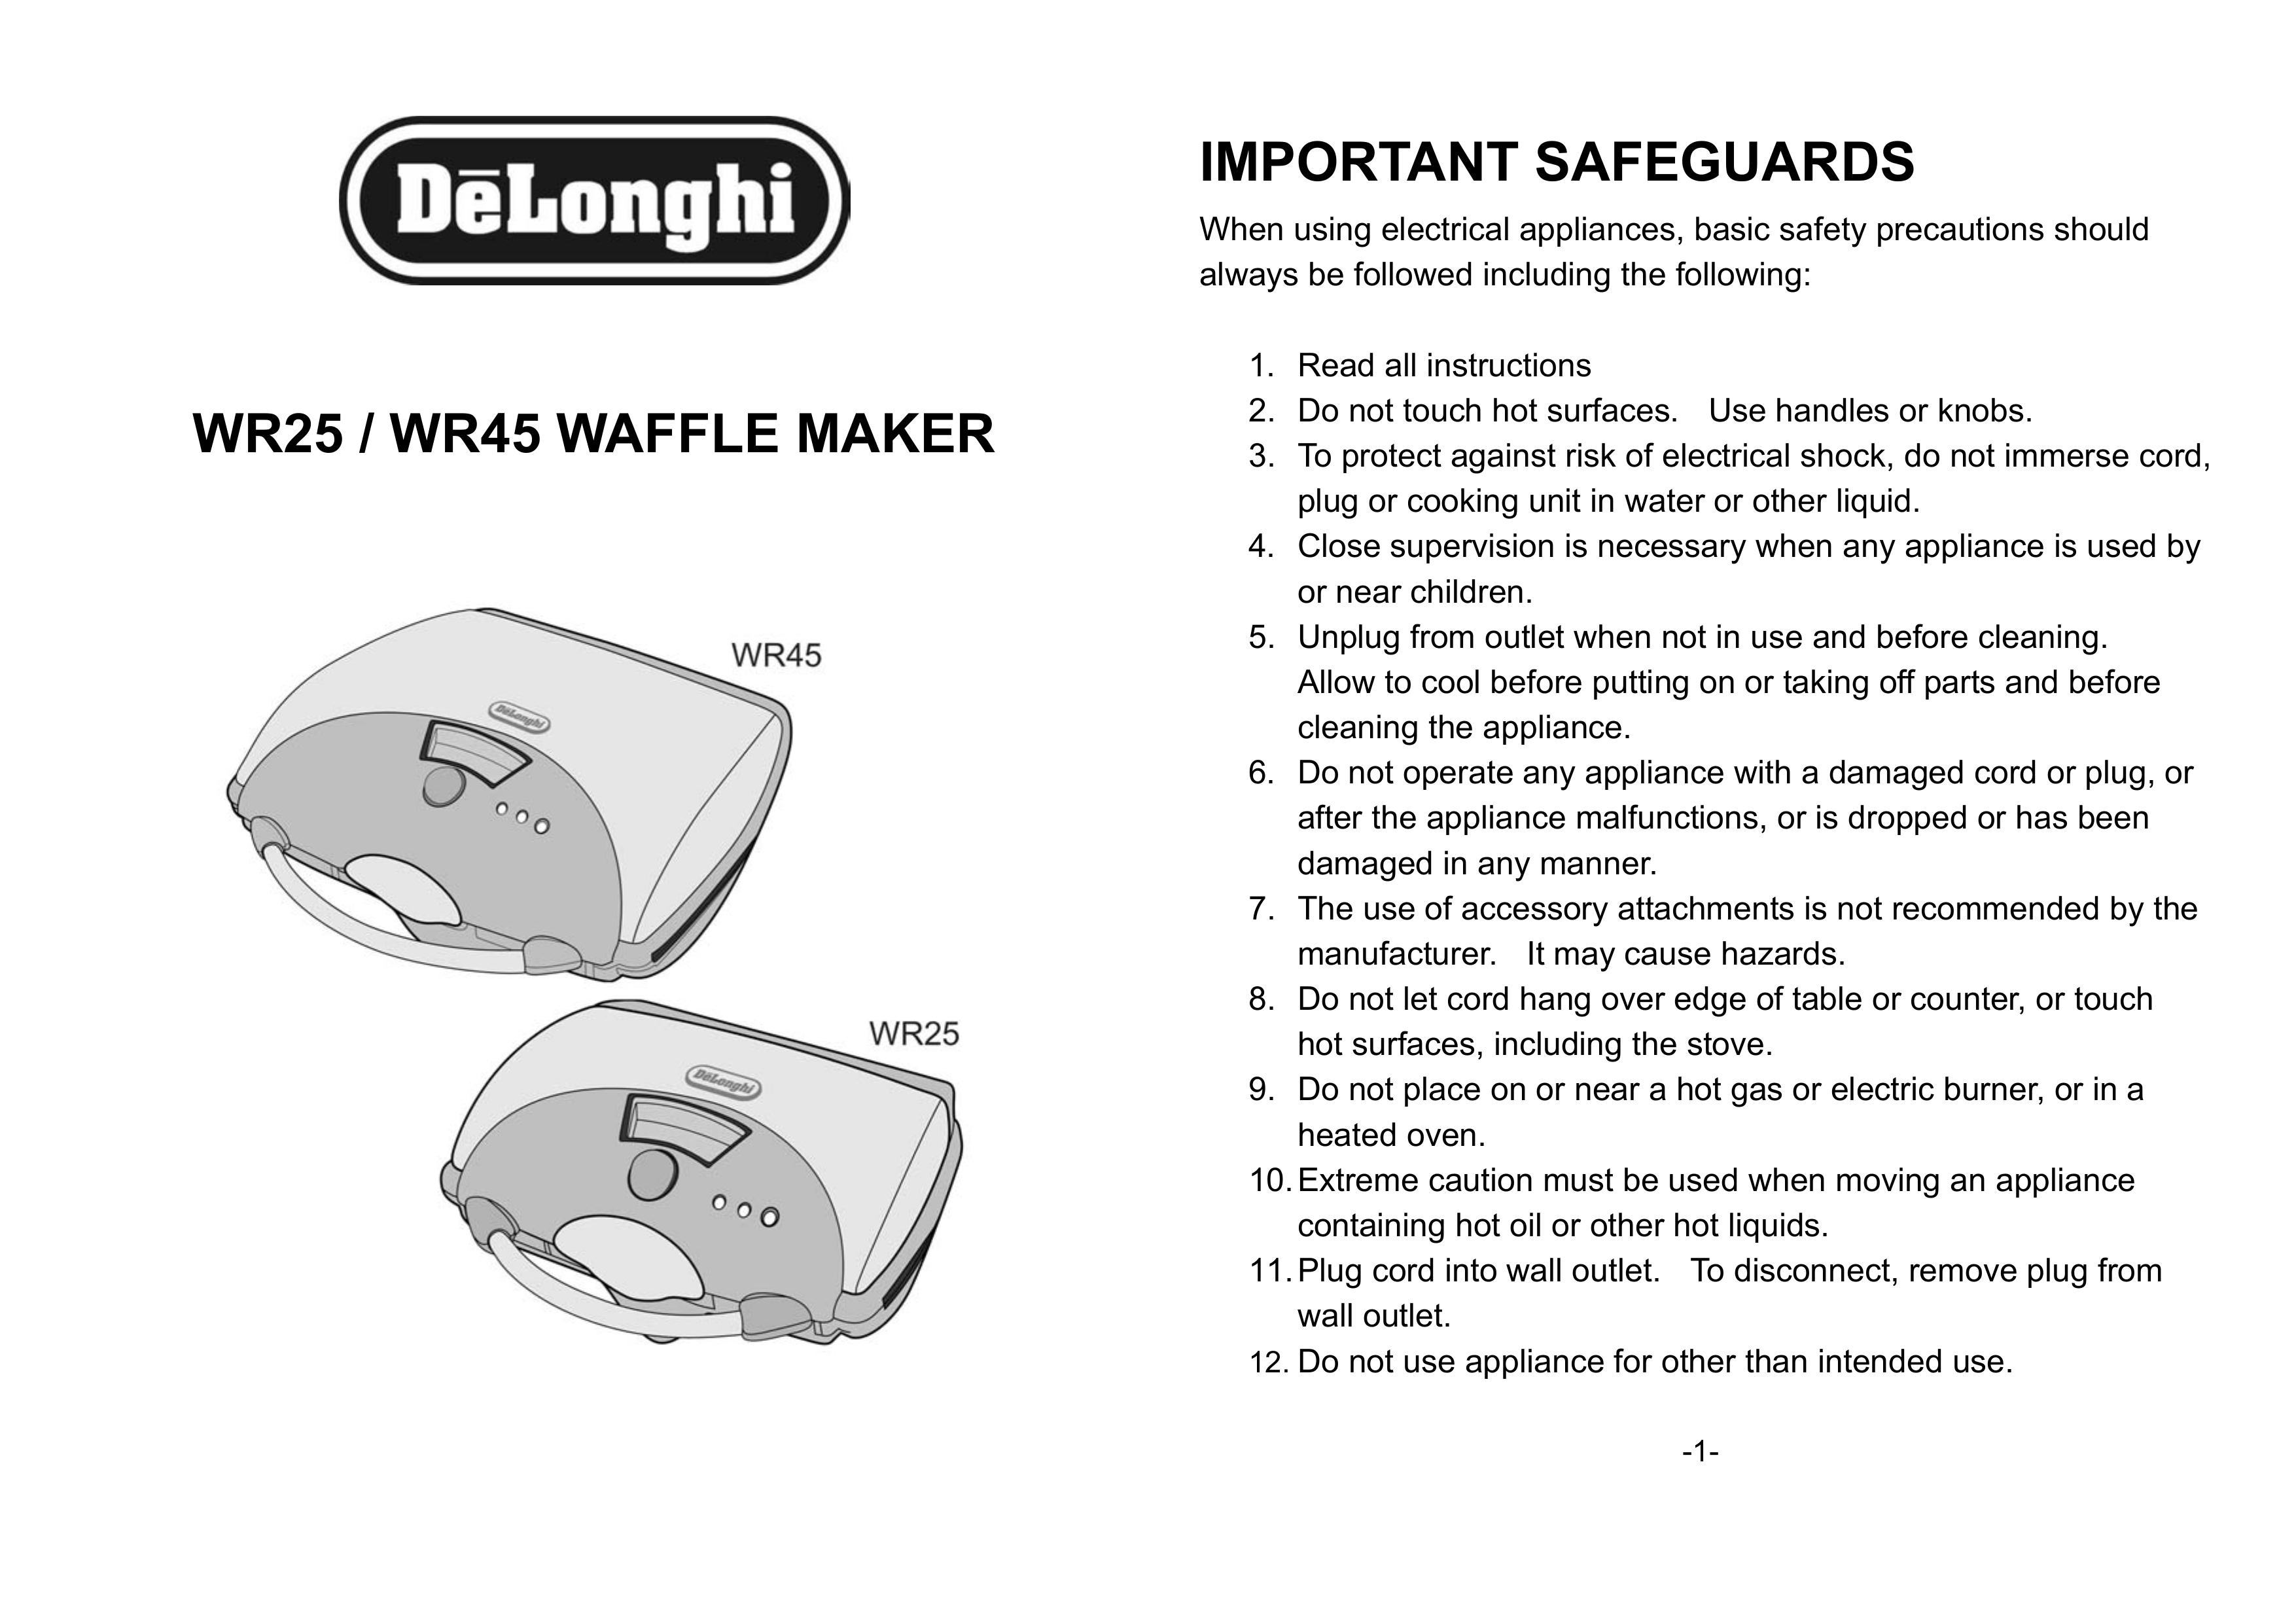 DeLonghi W45 Waffle Iron User Manual